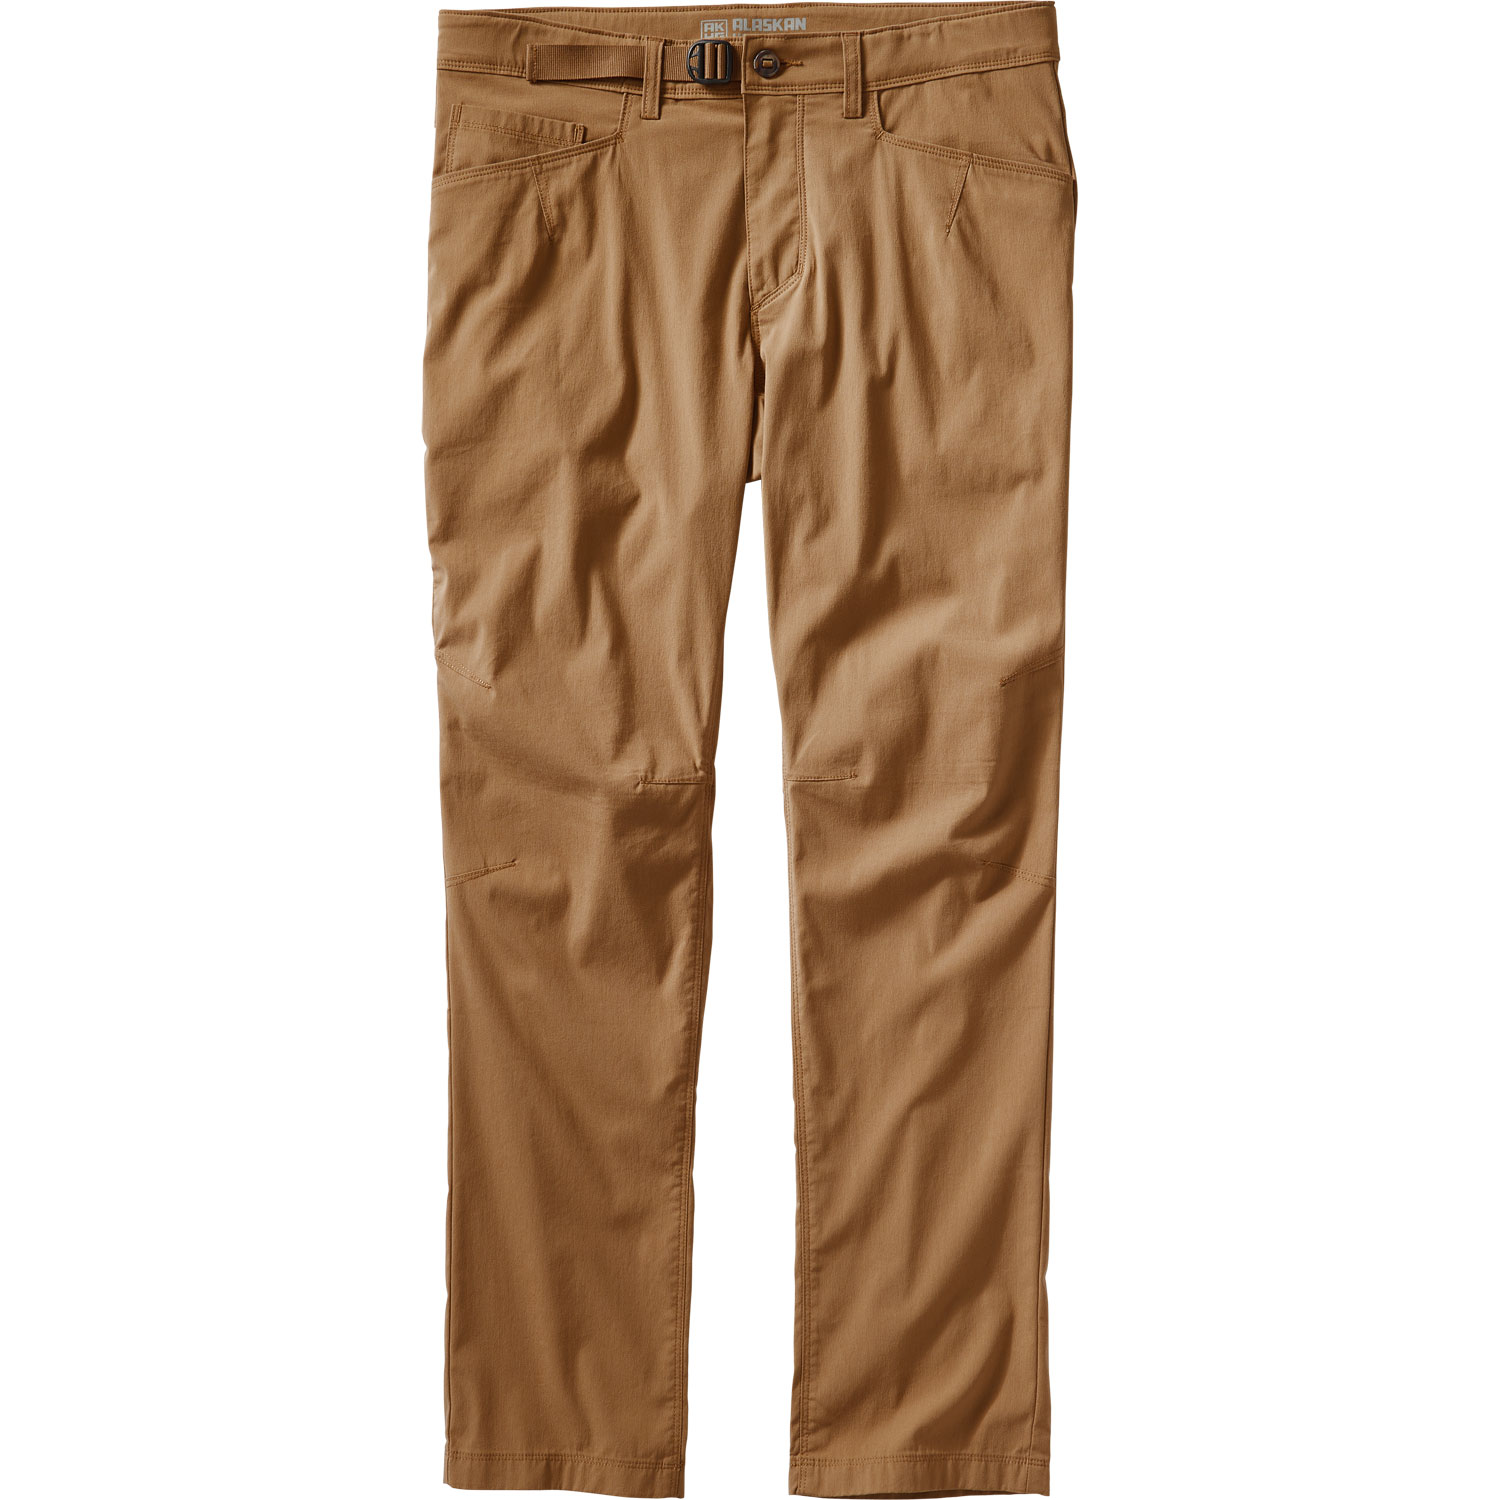 Men's AKHG Free Rein Pants | Duluth Trading Company